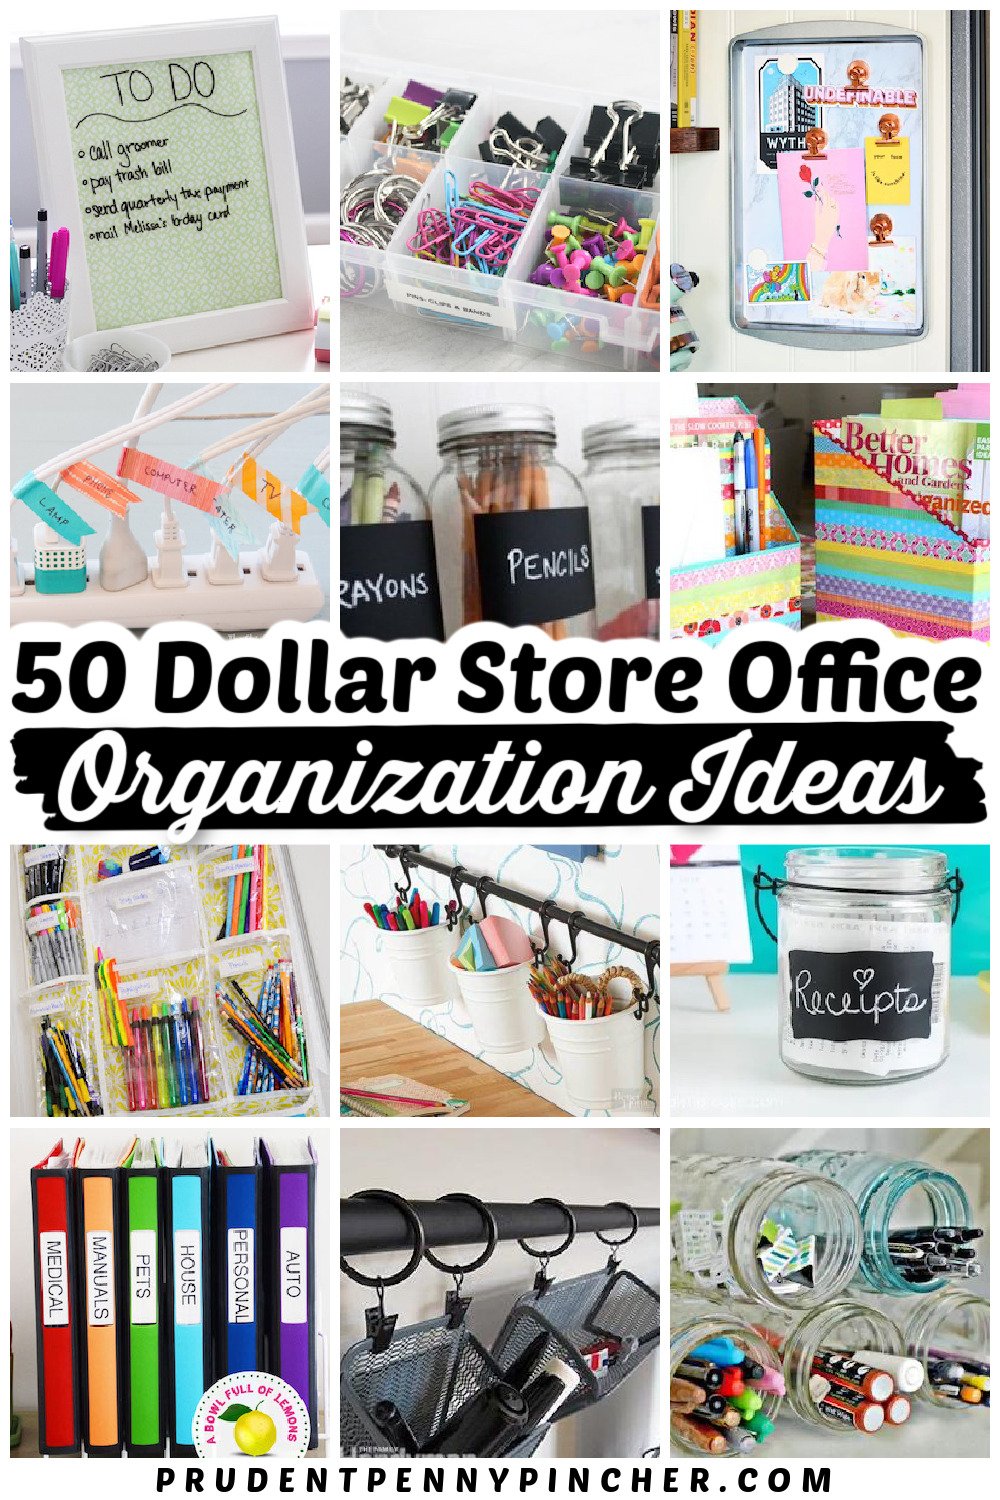 https://www.prudentpennypincher.com/wp-content/uploads/2021/01/dollar-store-home-office-organization-ideas.jpg